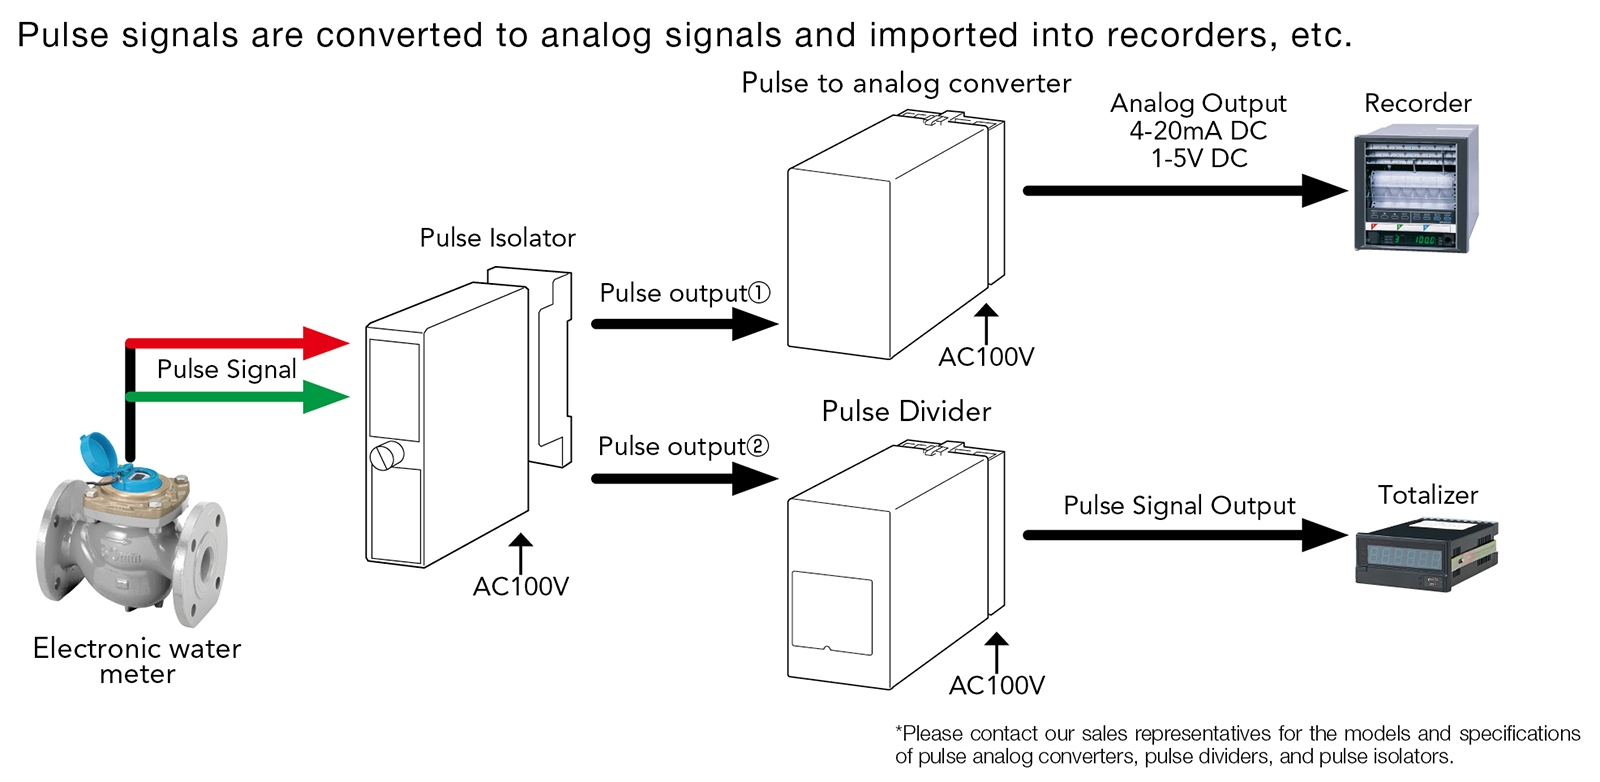 For 4-20mA analog signal